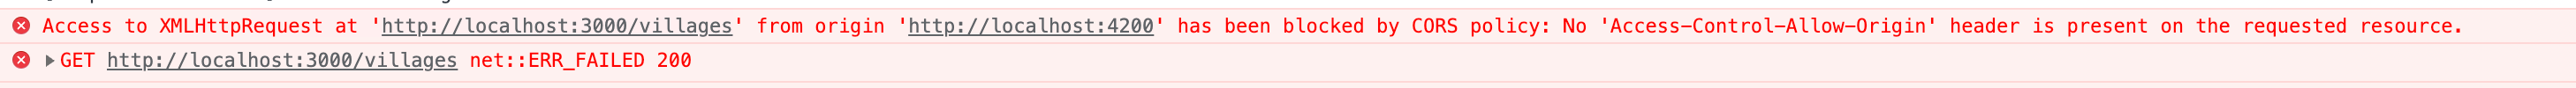 Chrome CORS request blocked error